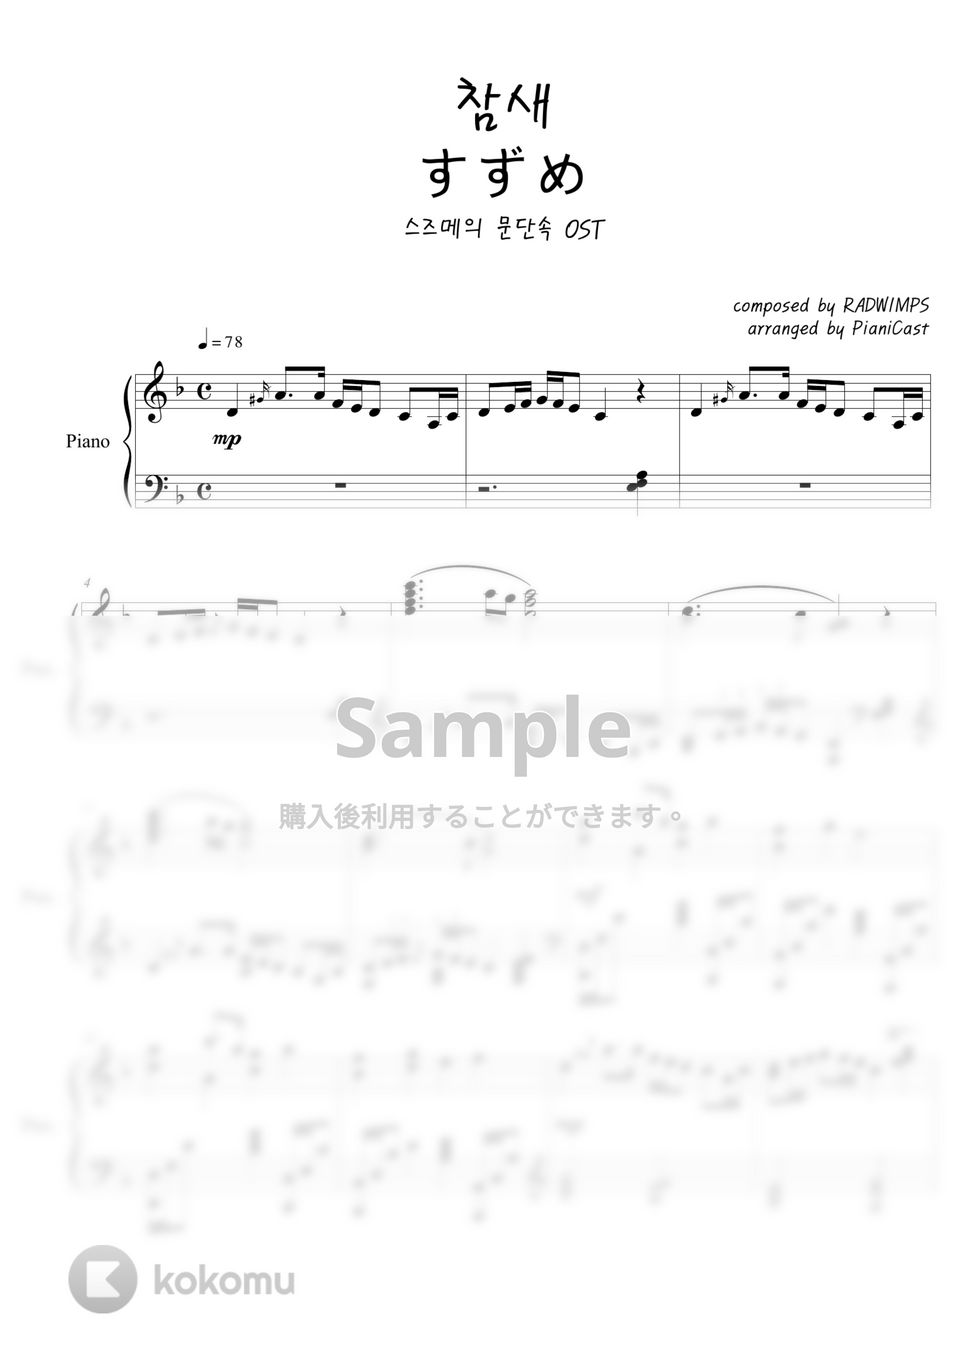 RADWIMPS - すずめ by Pianicast